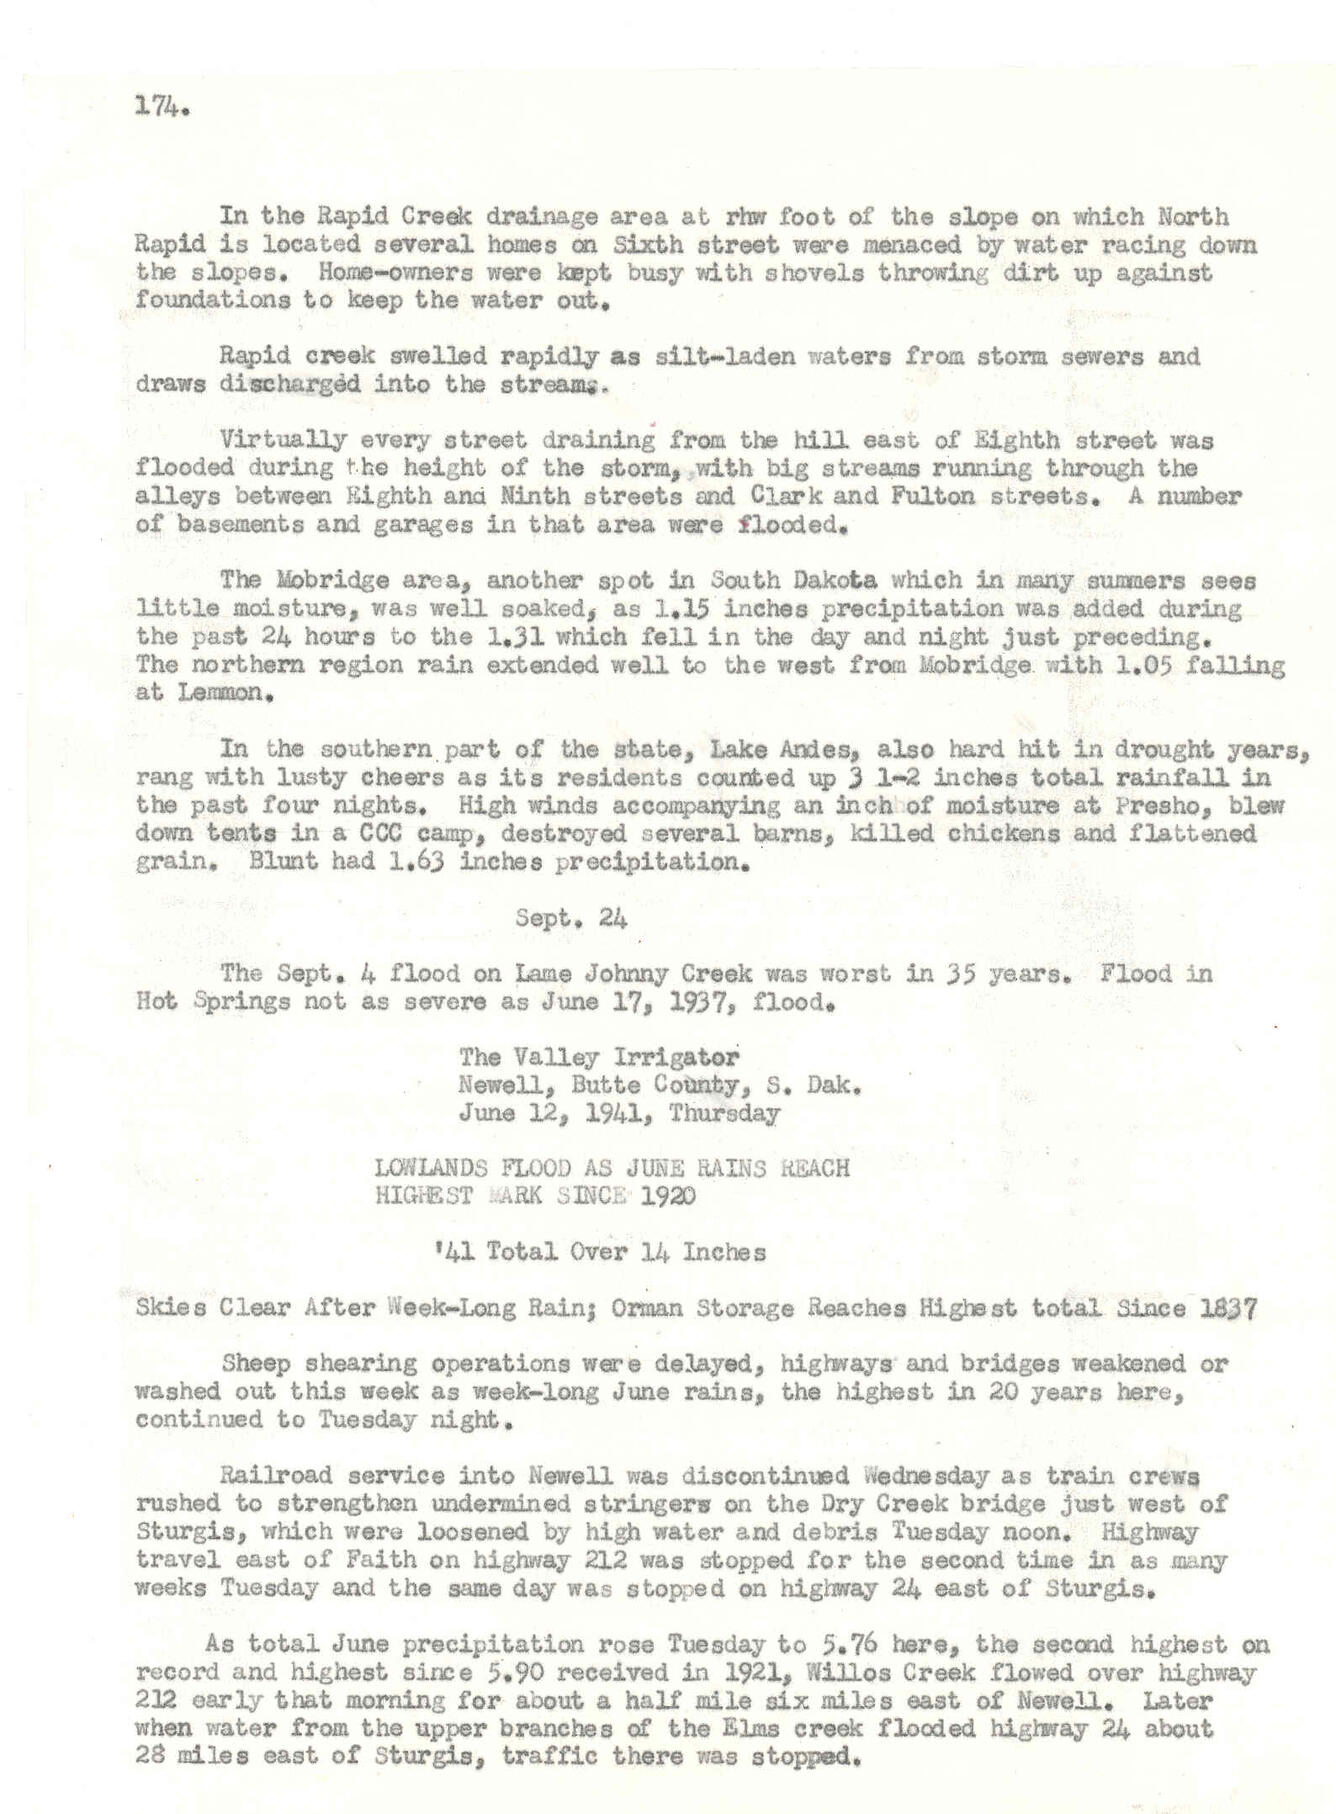 Valley Irrigator (June 12, 1941) Page 1